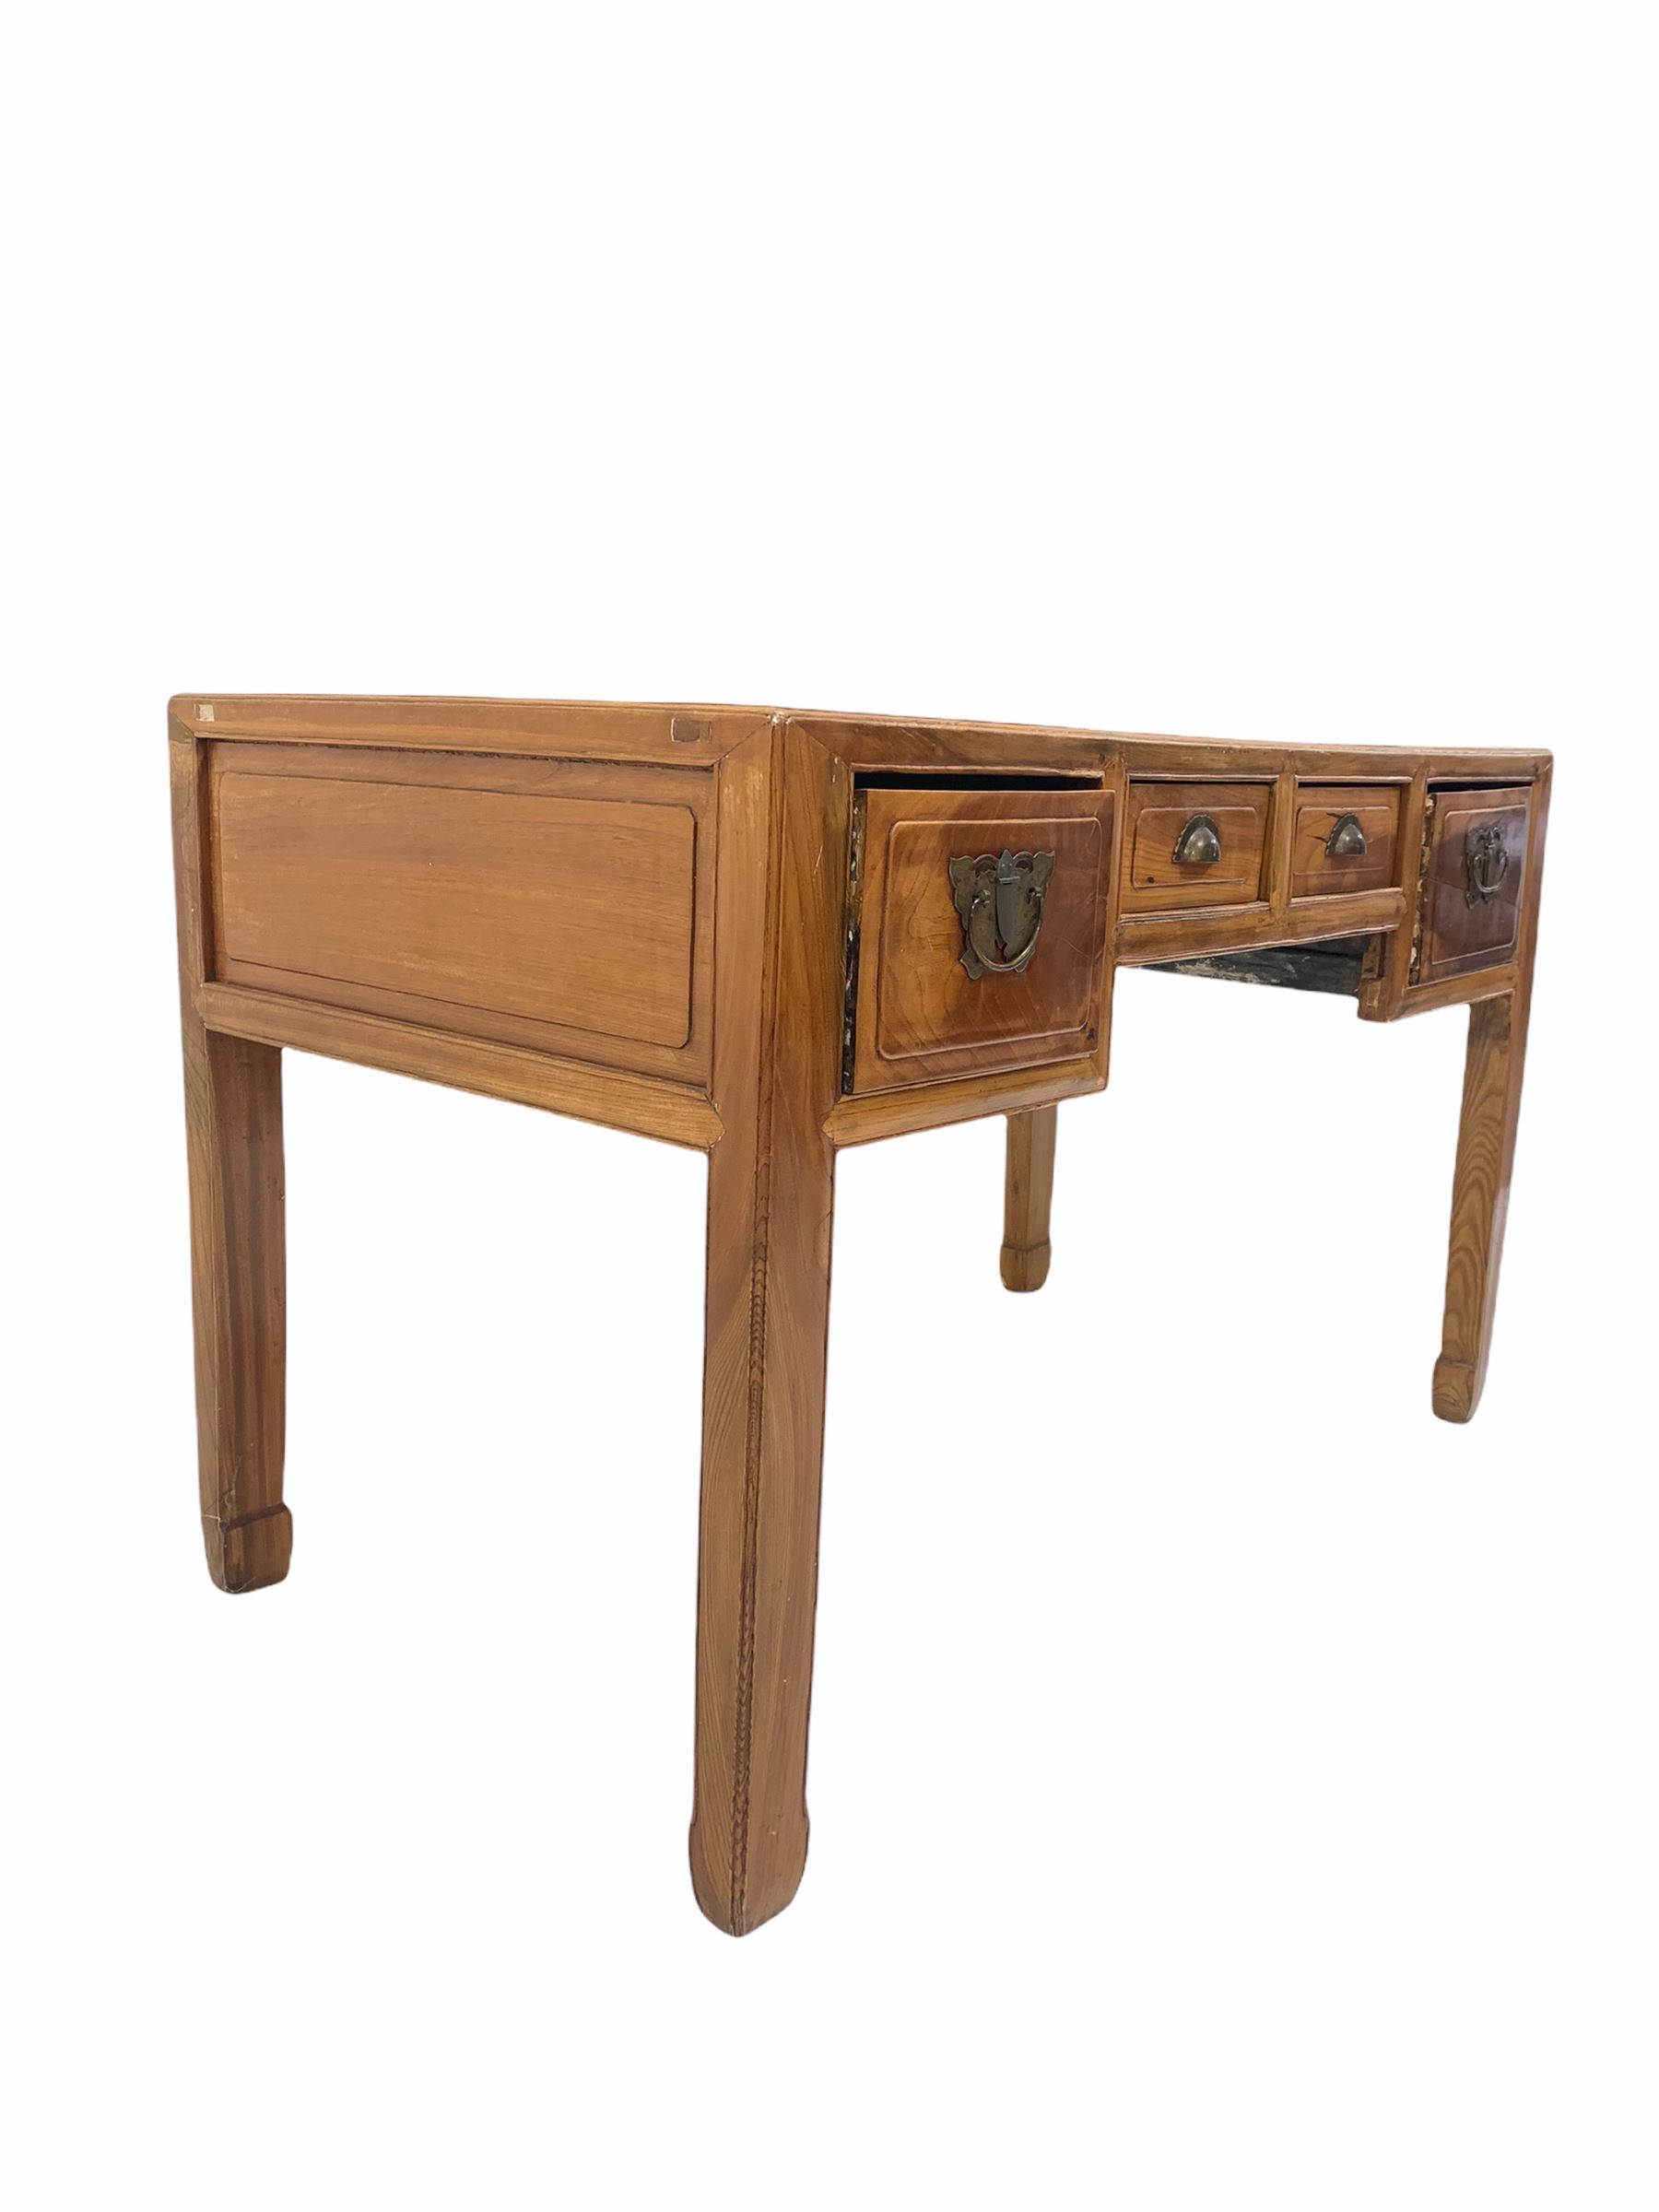 20th century Chinese hardwood side table - Image 2 of 3